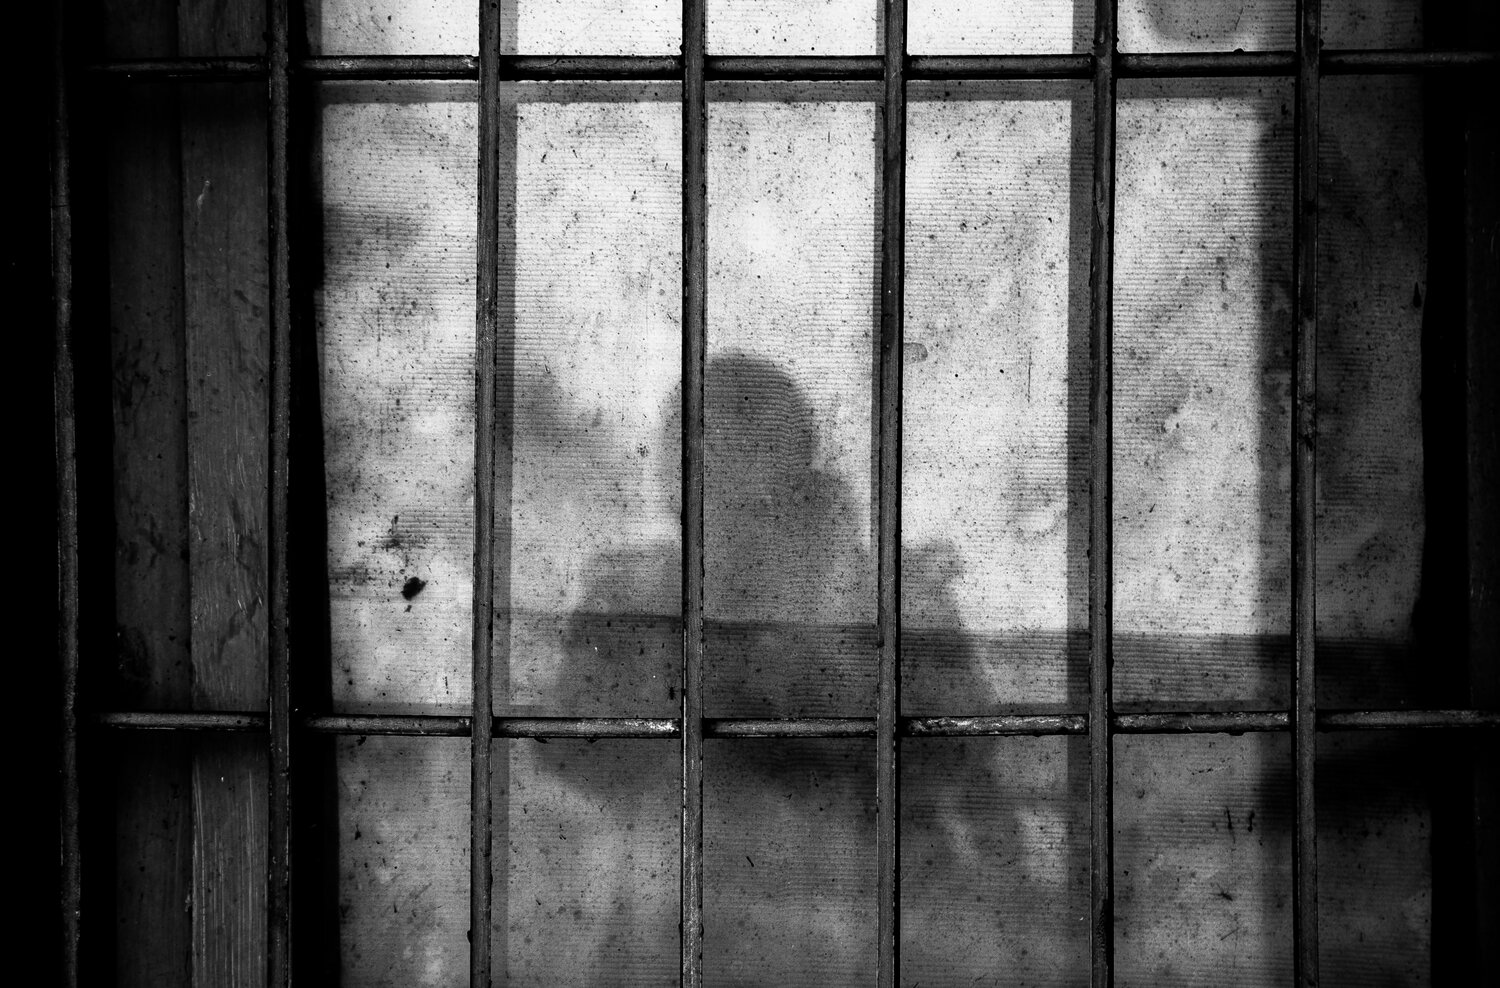 Shadow of a person through jail bars